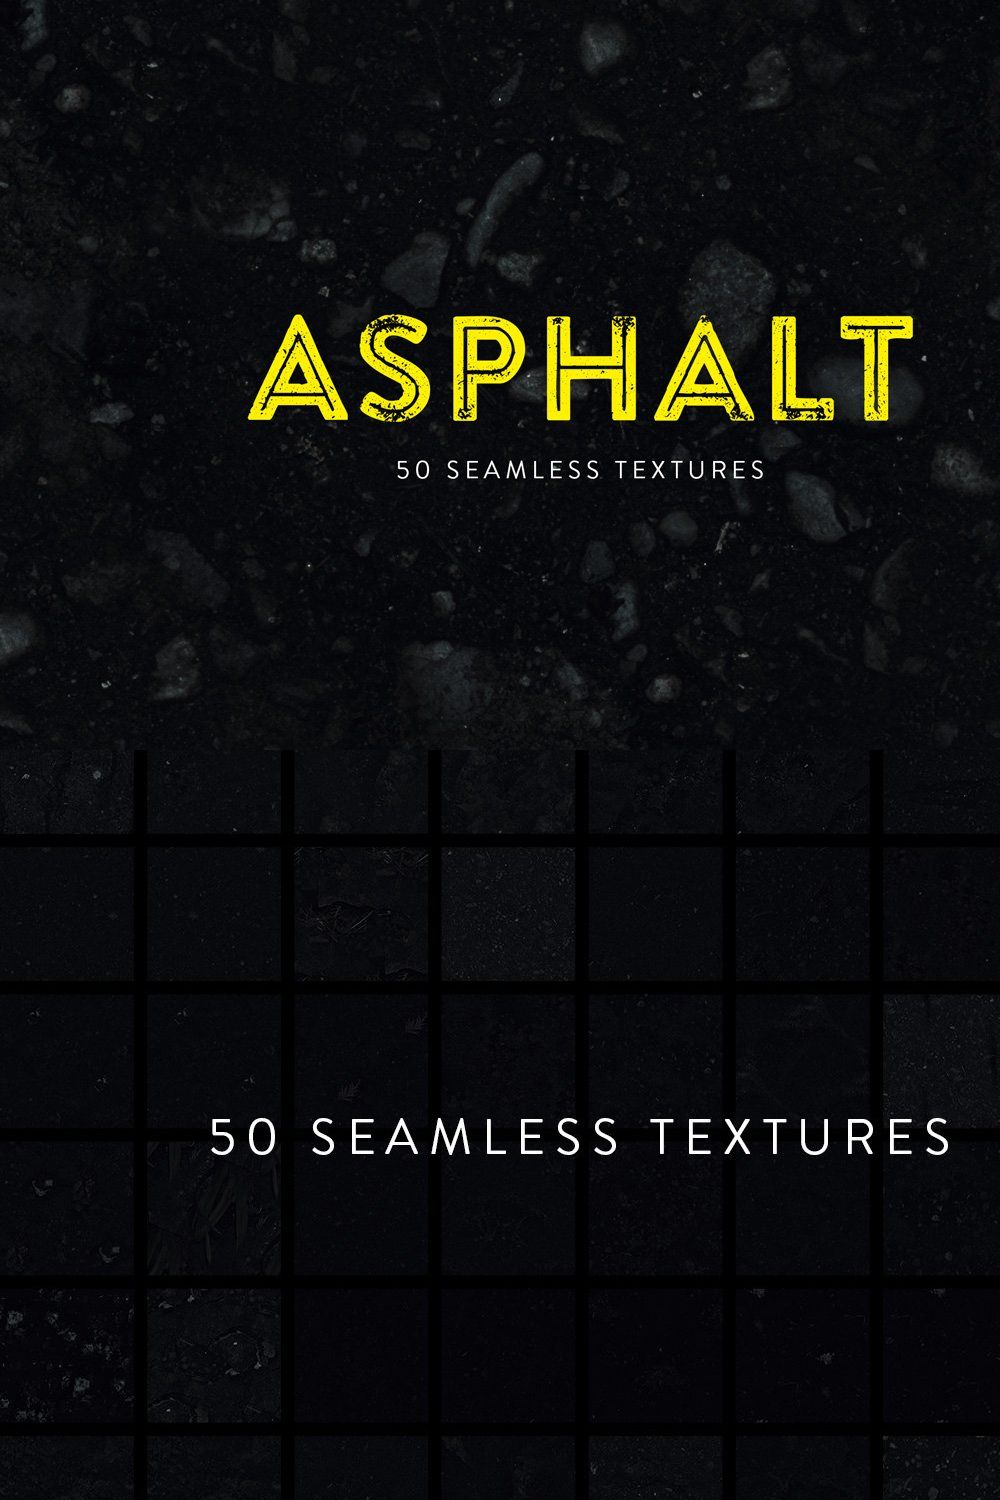 Asphalt - 50 Seamless Textures pinterest preview image.